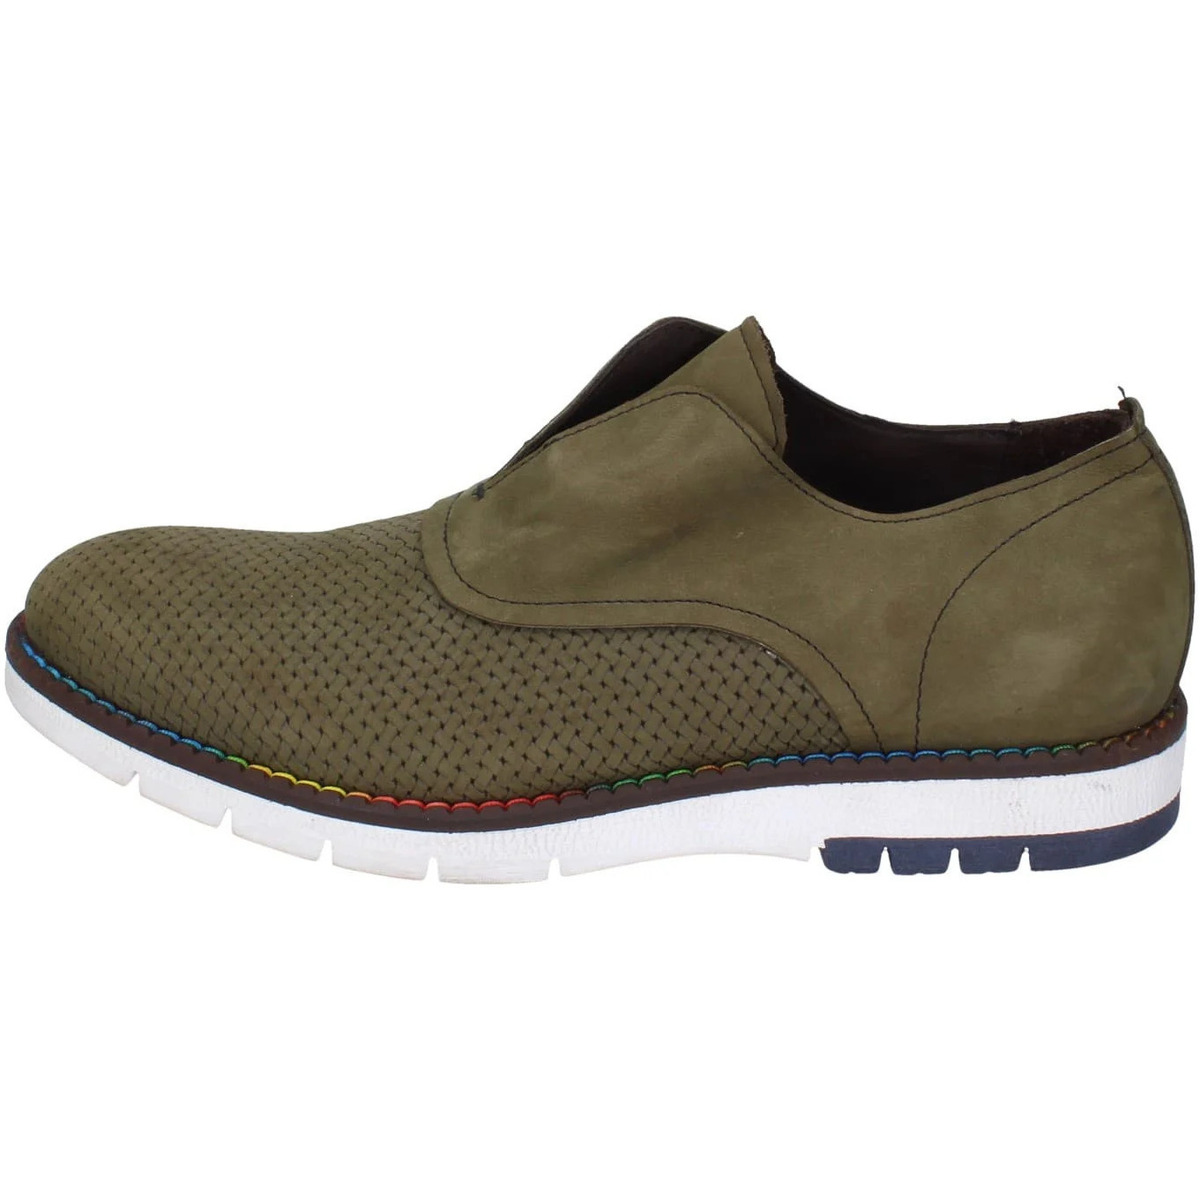 Shoes Men Loafers Eveet EZ183 Green